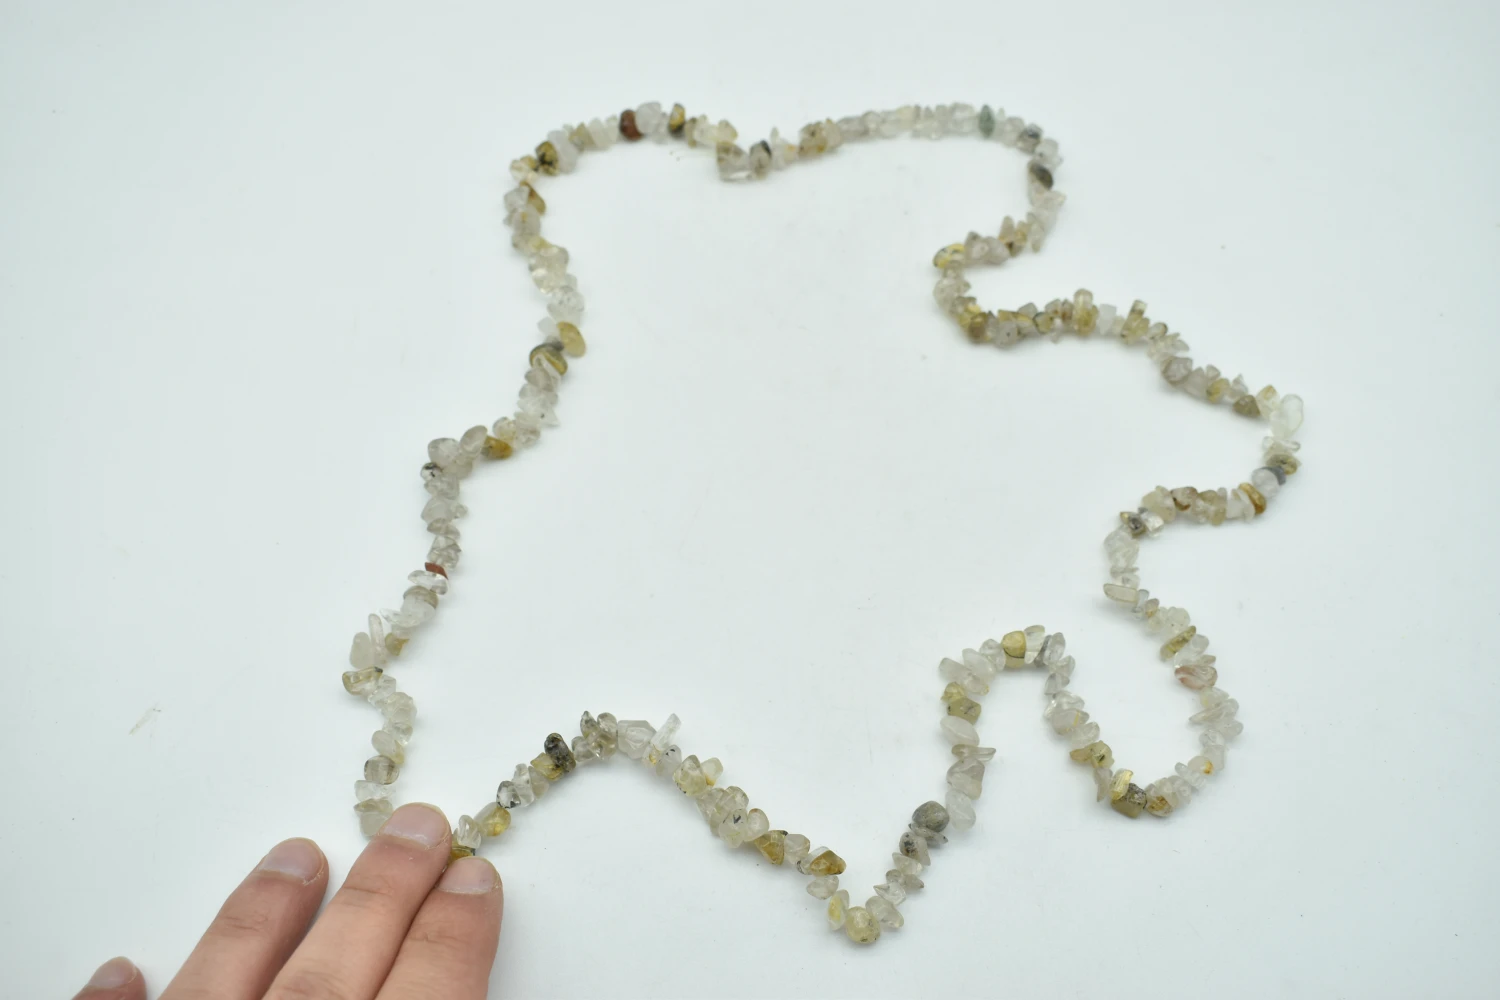 Rutilated quartz stone necklace